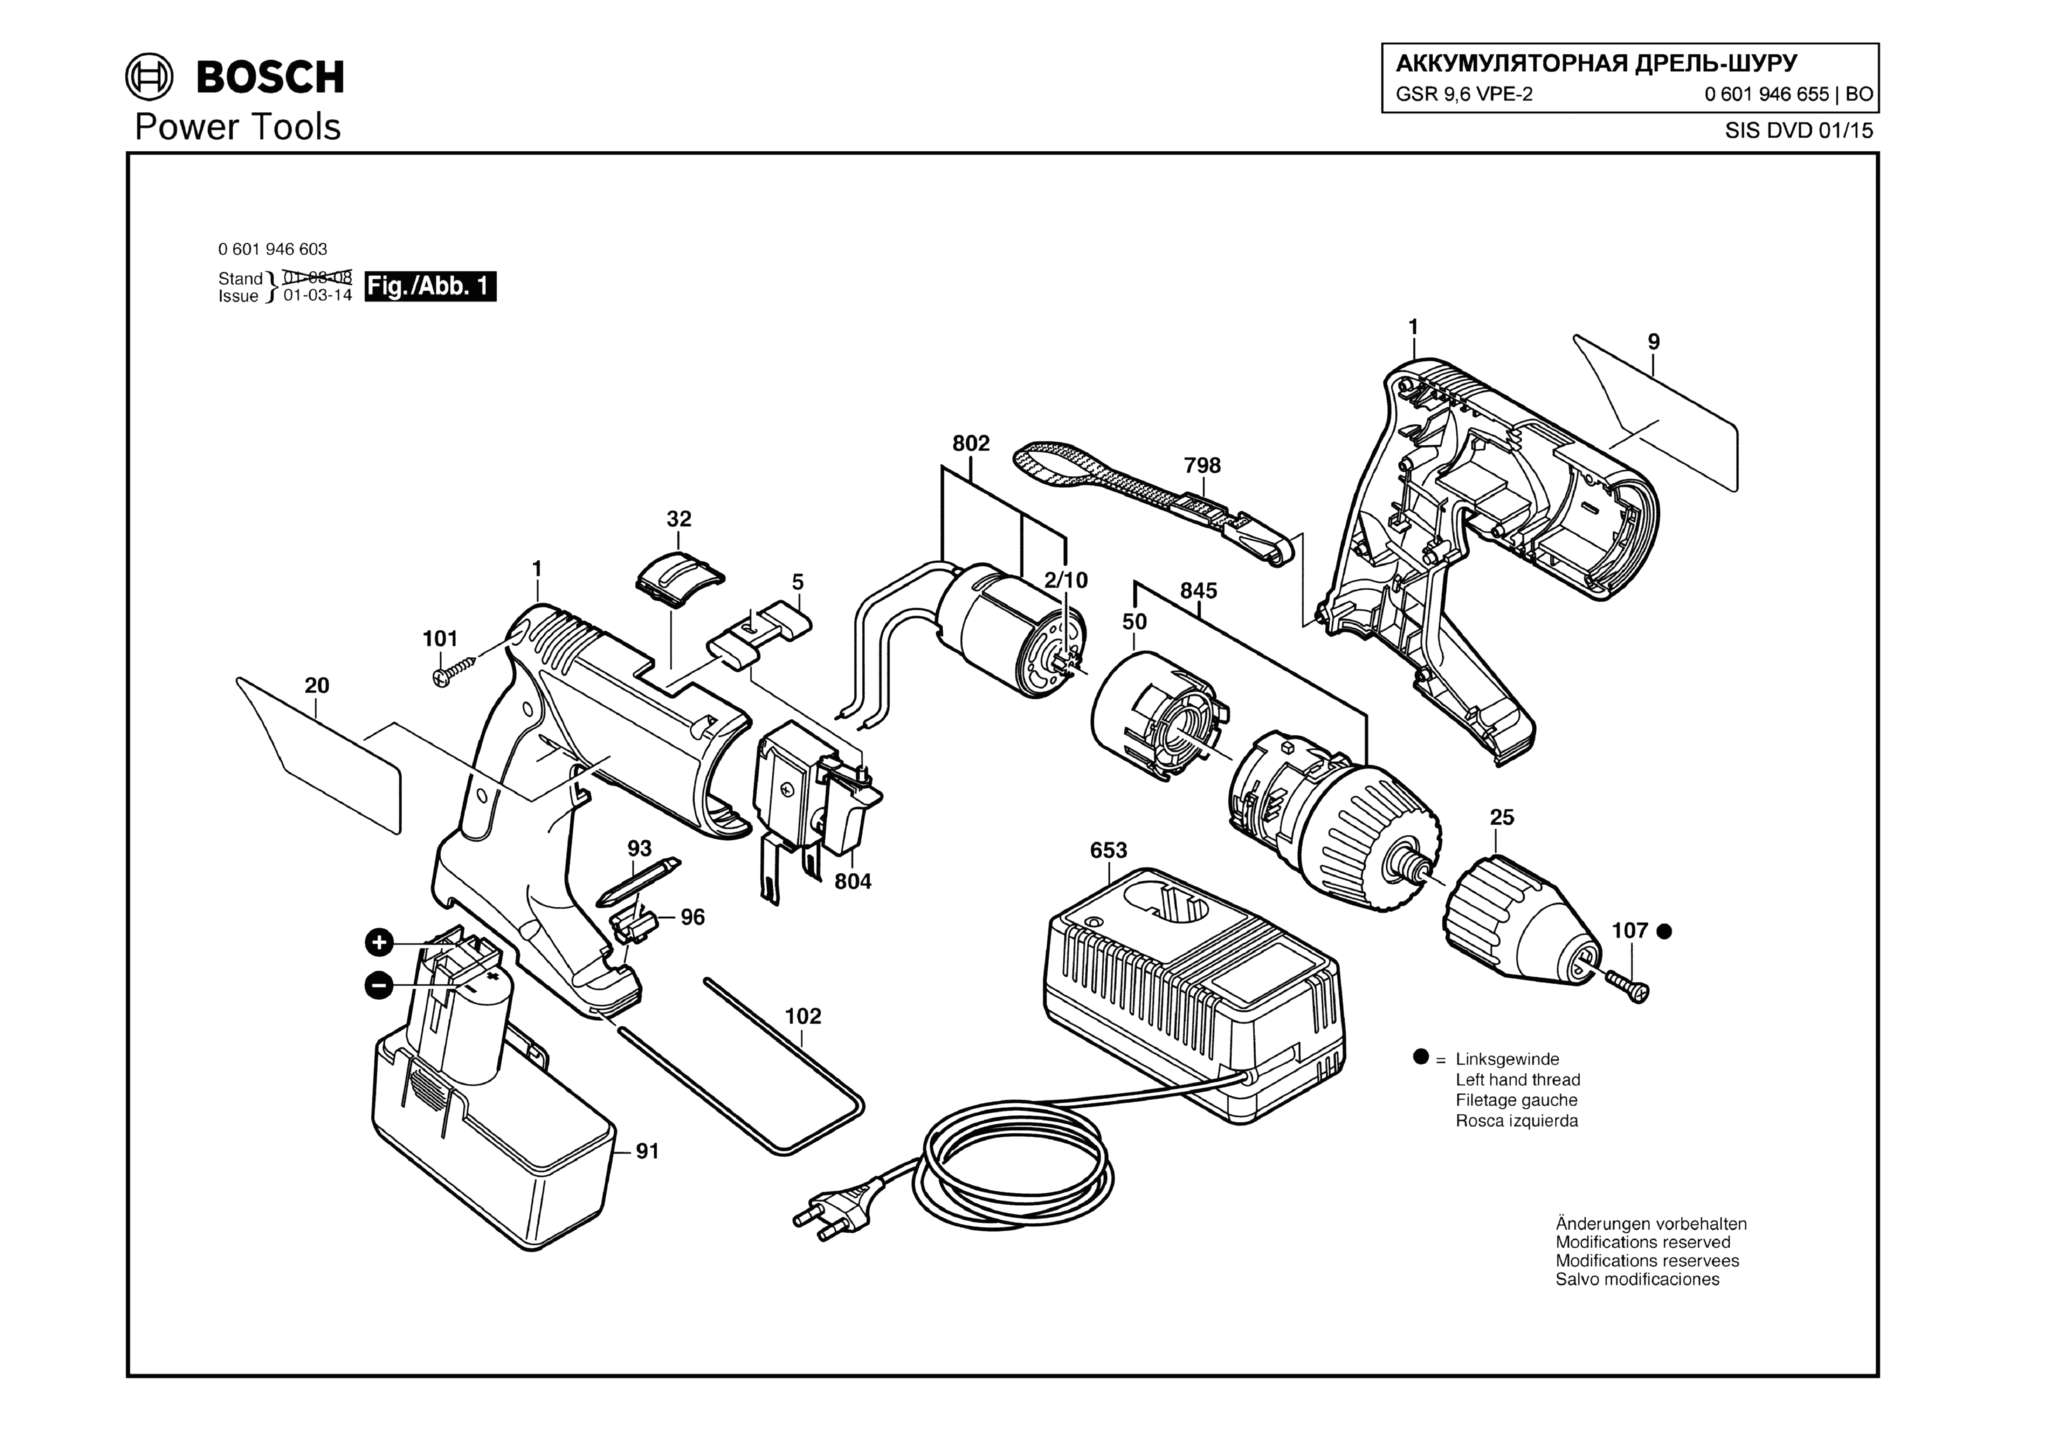 Запчасти, схема и деталировка Bosch GSR 9,6 VPE-2 (ТИП 0601946655)